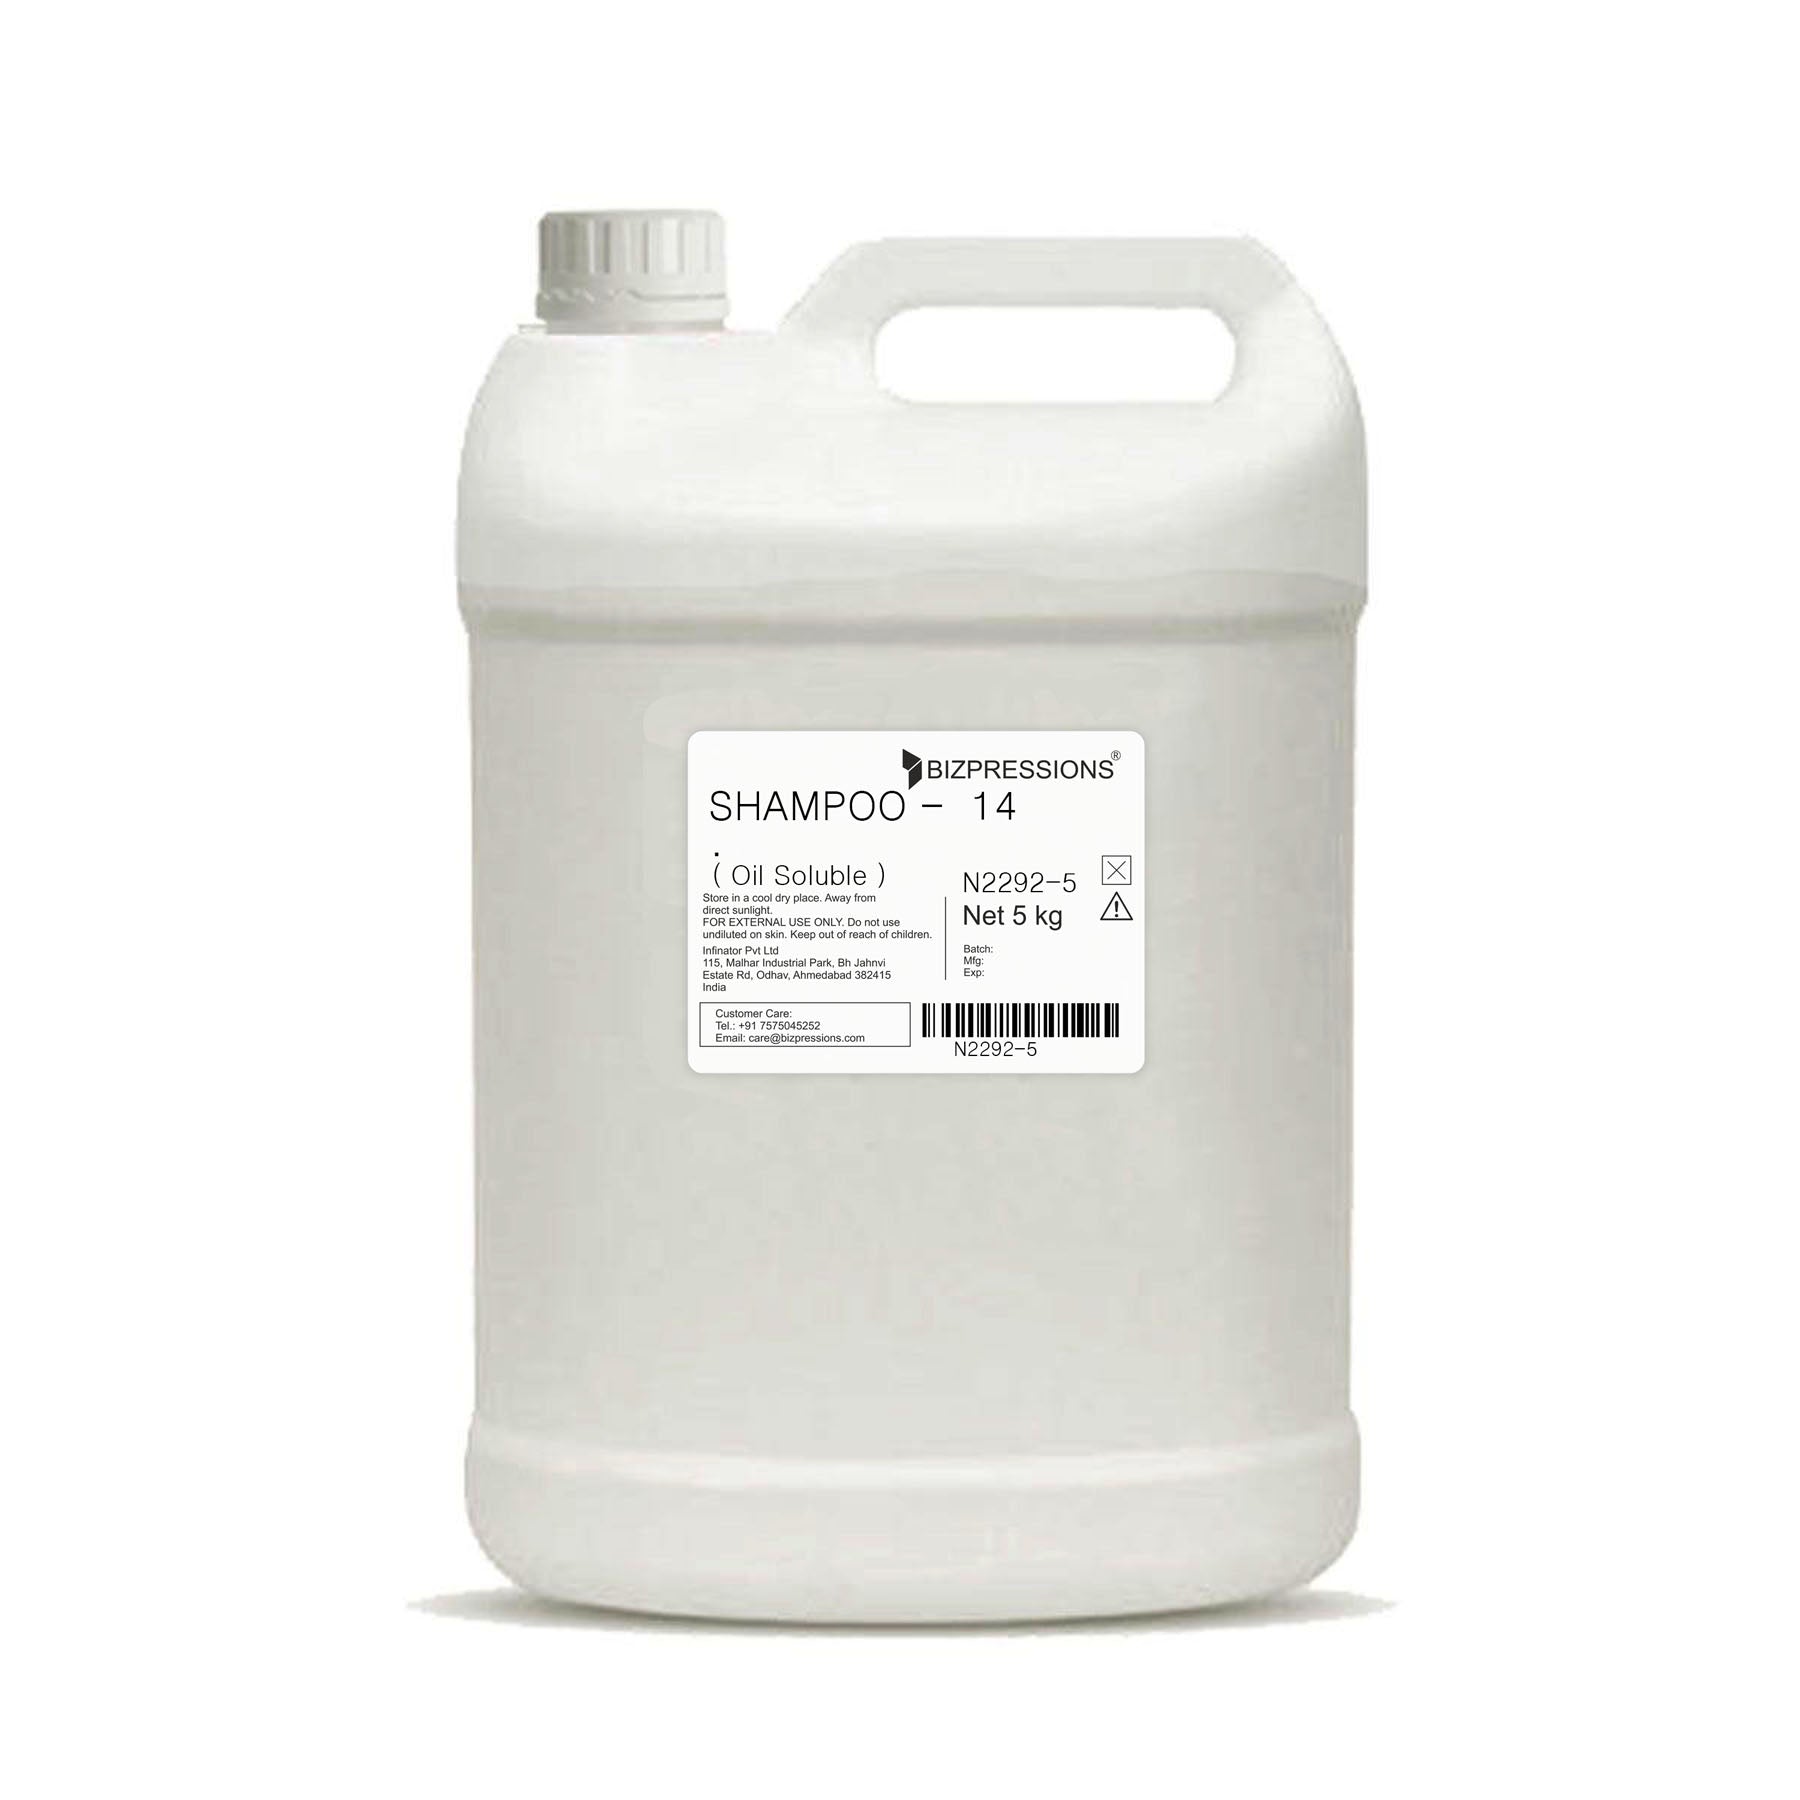 SHAMPOO - 14 - Fragrance ( Oil Soluble ) - 5 kg